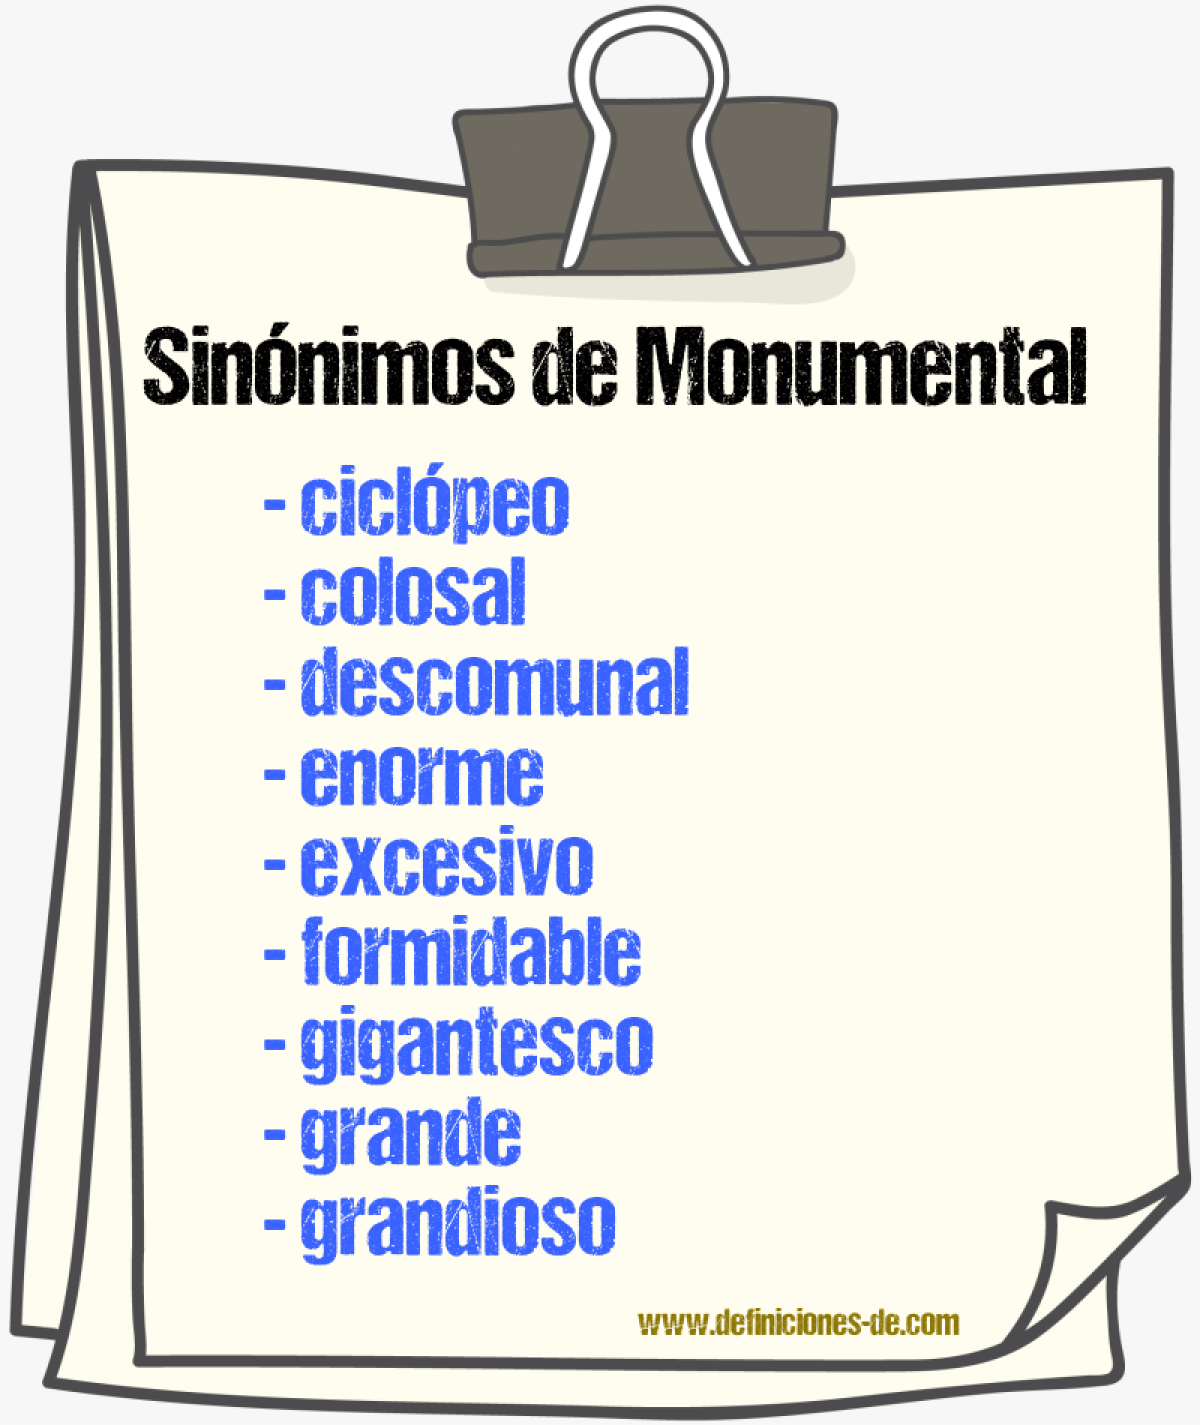 Sinónimos de monumental